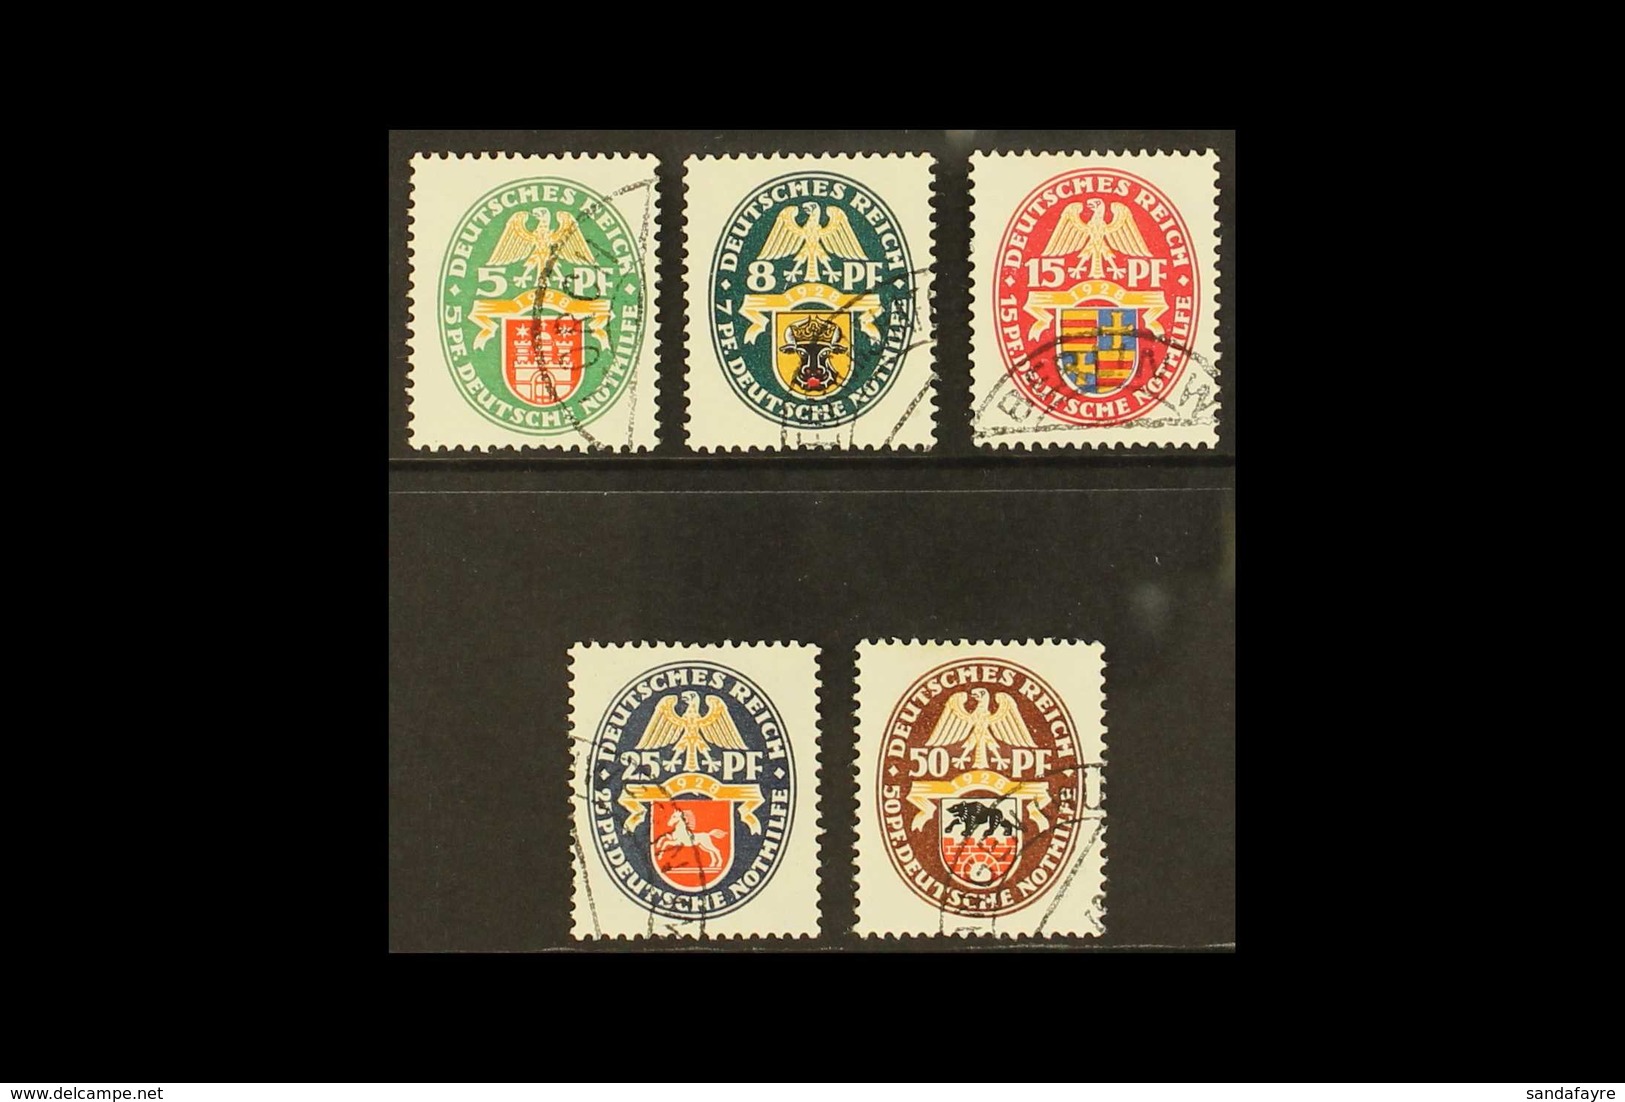 1928 Welfare Fund - Arms Complete Set (Michel 425/29, SG 446/50), Superb Cds Used, Fresh. (5 Stamps) For More Images, Pl - Autres & Non Classés